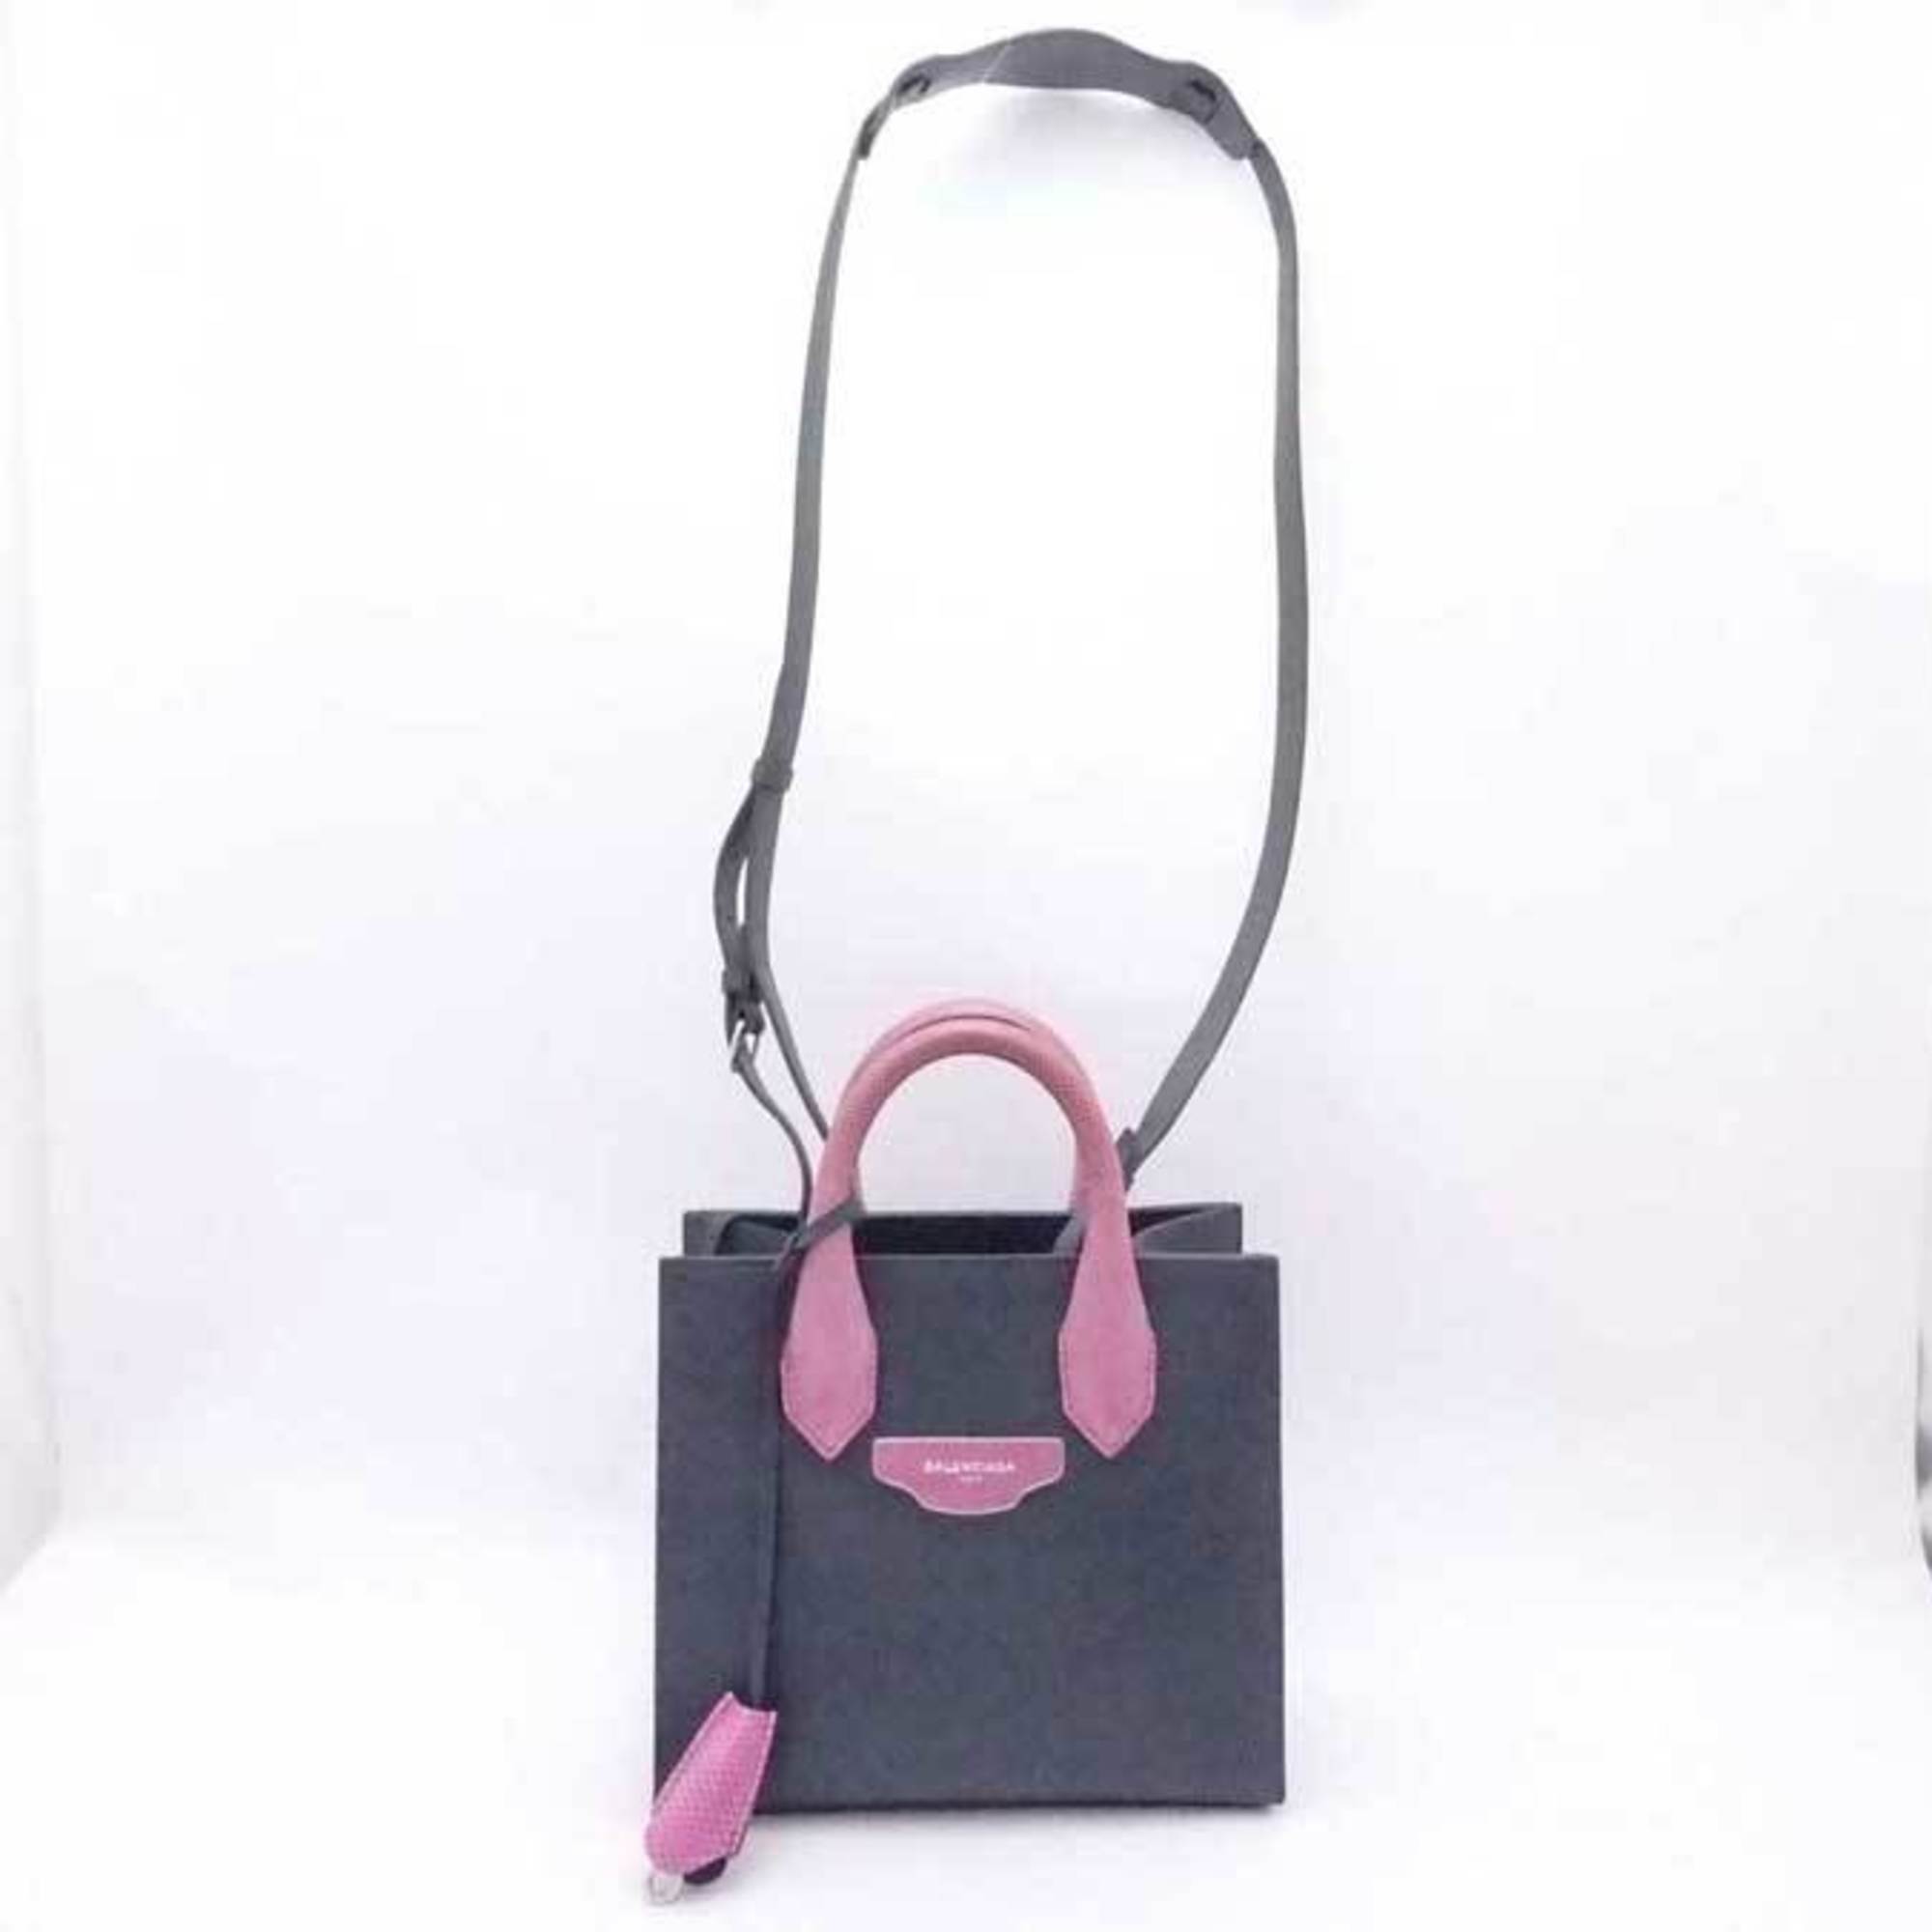 Balenciaga BALENCIAGA handbag shoulder bag leather gray x pink purple silver ladies